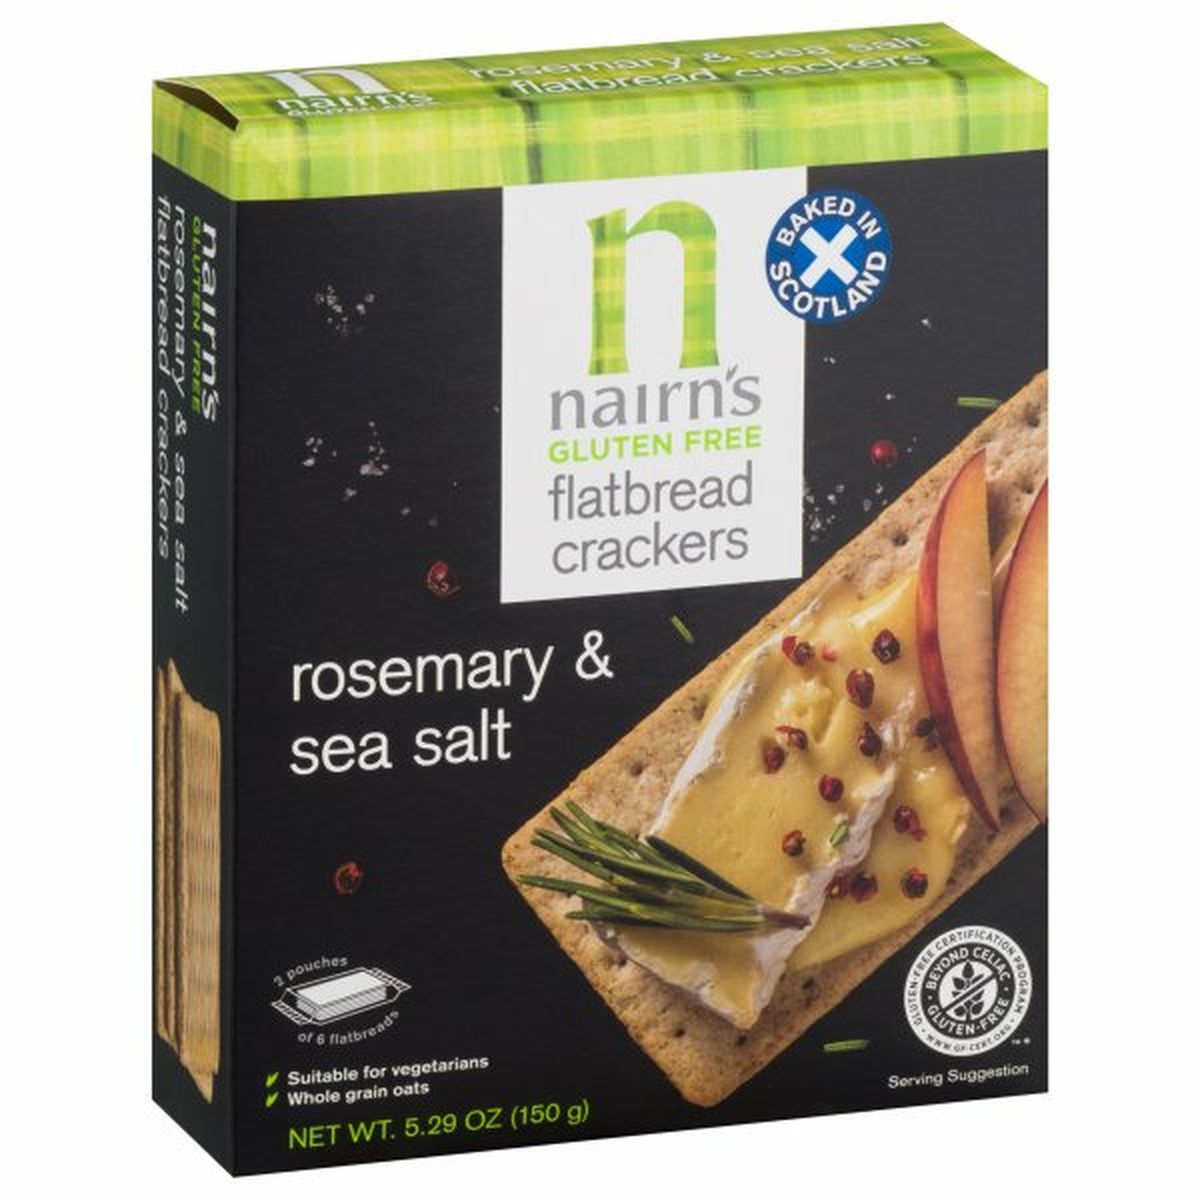 Calories in Nairn's Flatbread Crackers, Gluten Free, Rosemary & Sea Salt